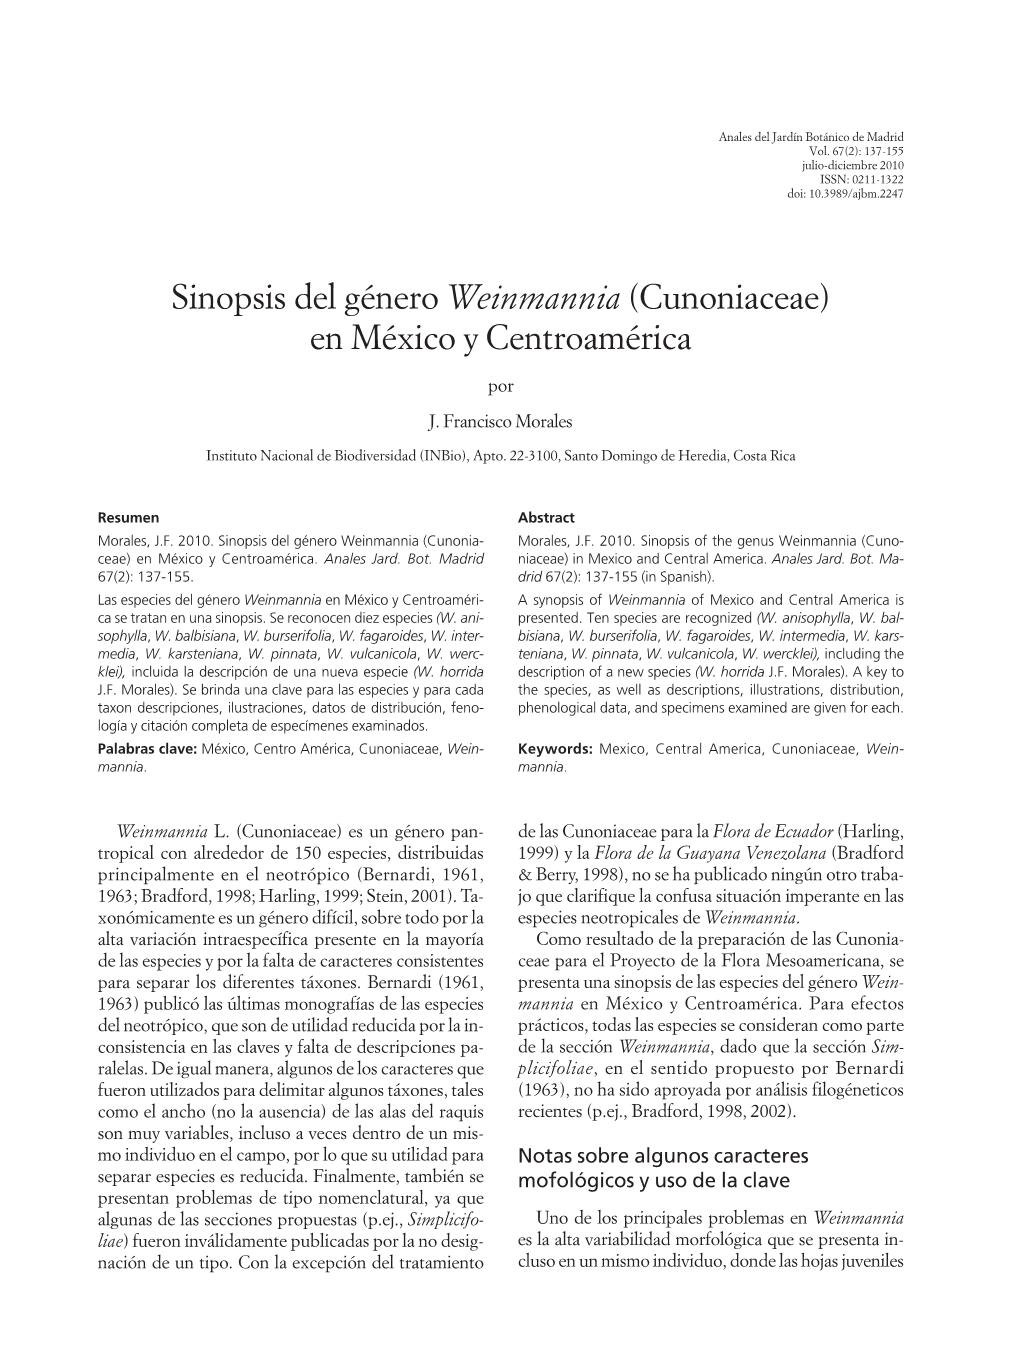 Cunoniaceae) En México Y Centroamérica